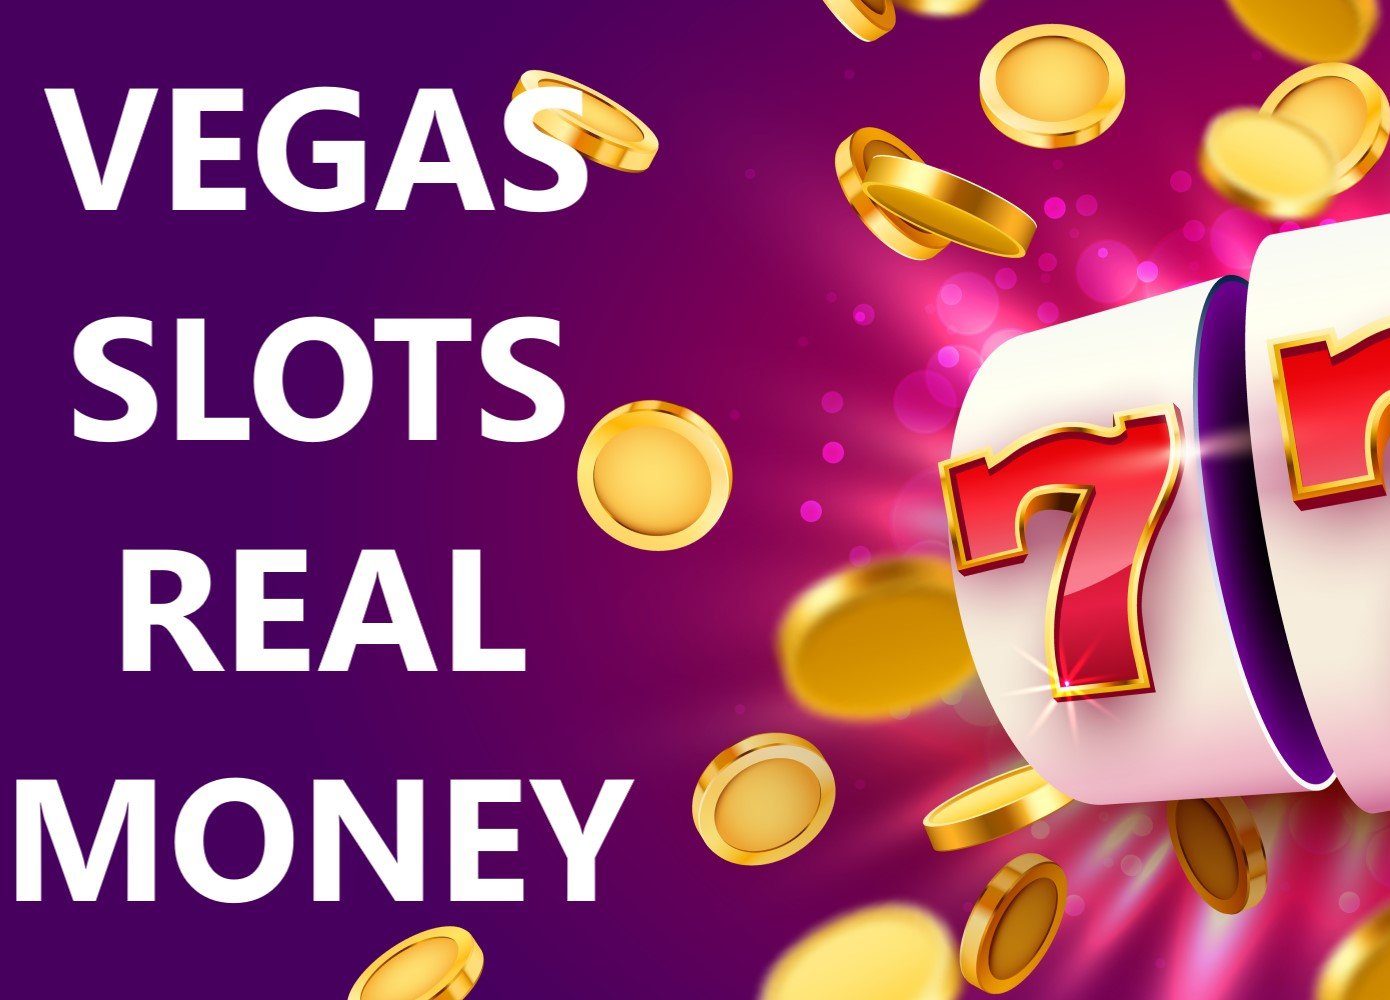 Vegas Slots For Real Money